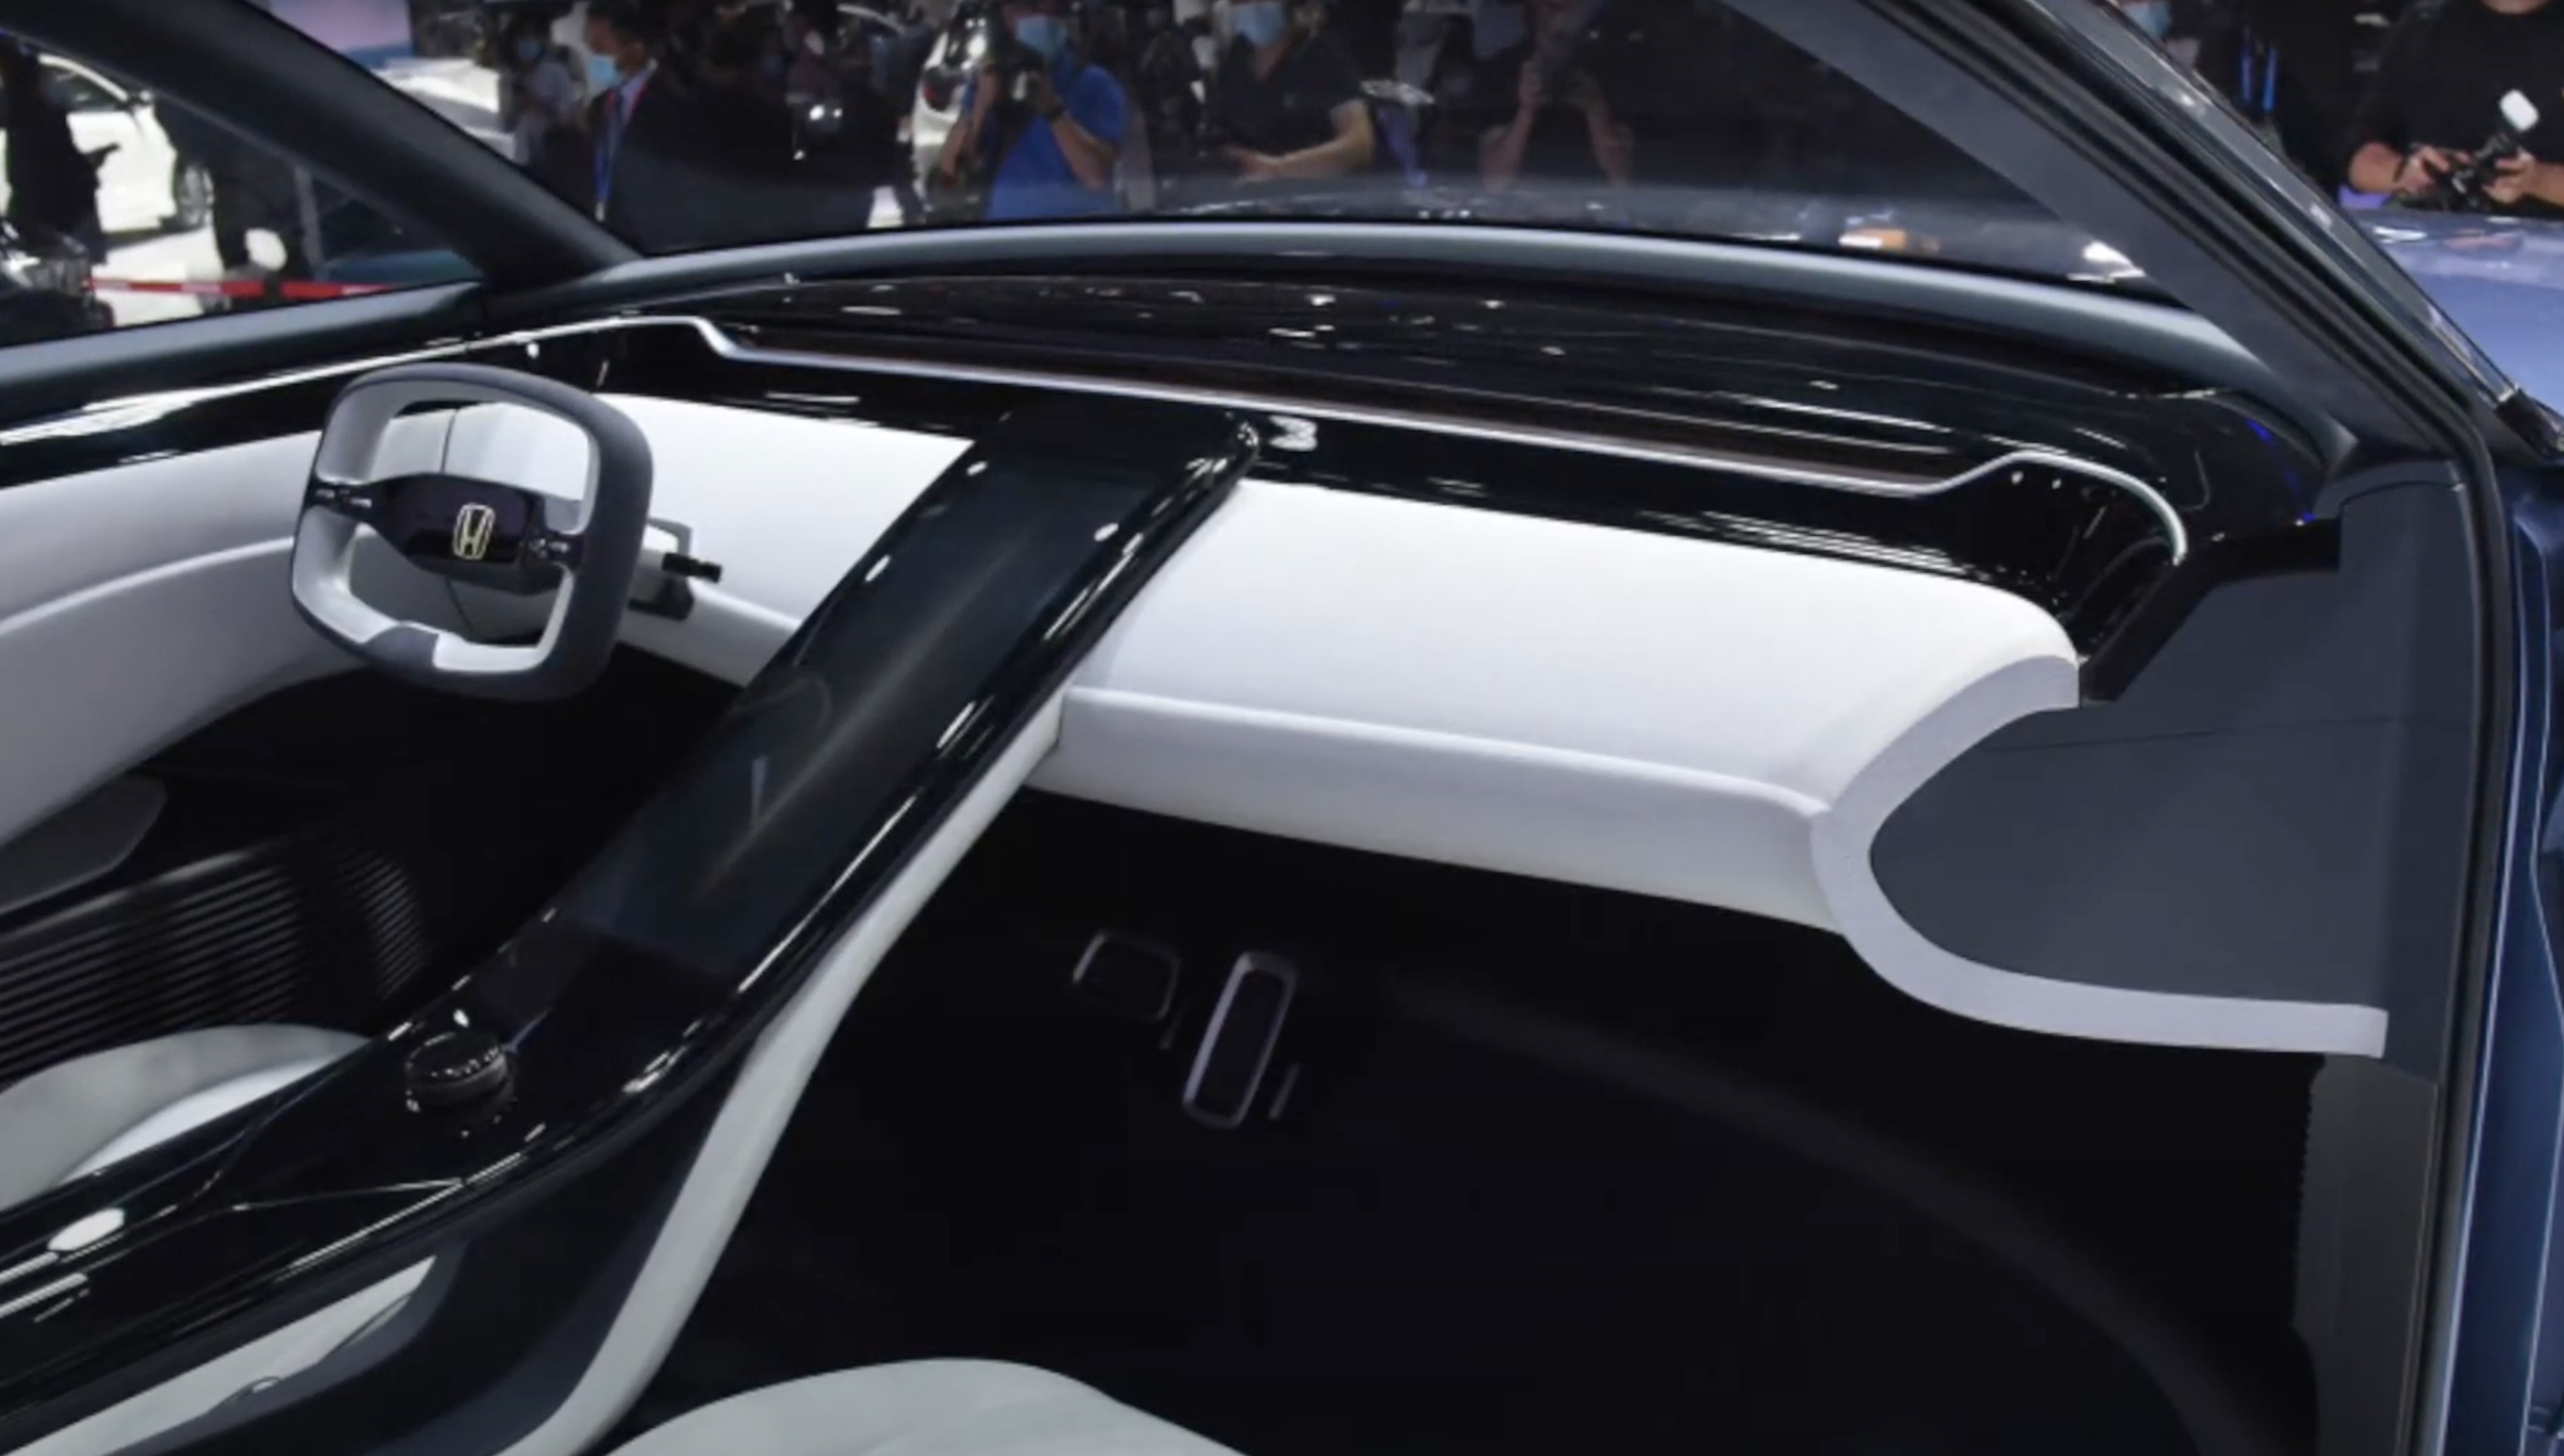 Honda unveils sleek new electric SUV concept, showing 'future mass